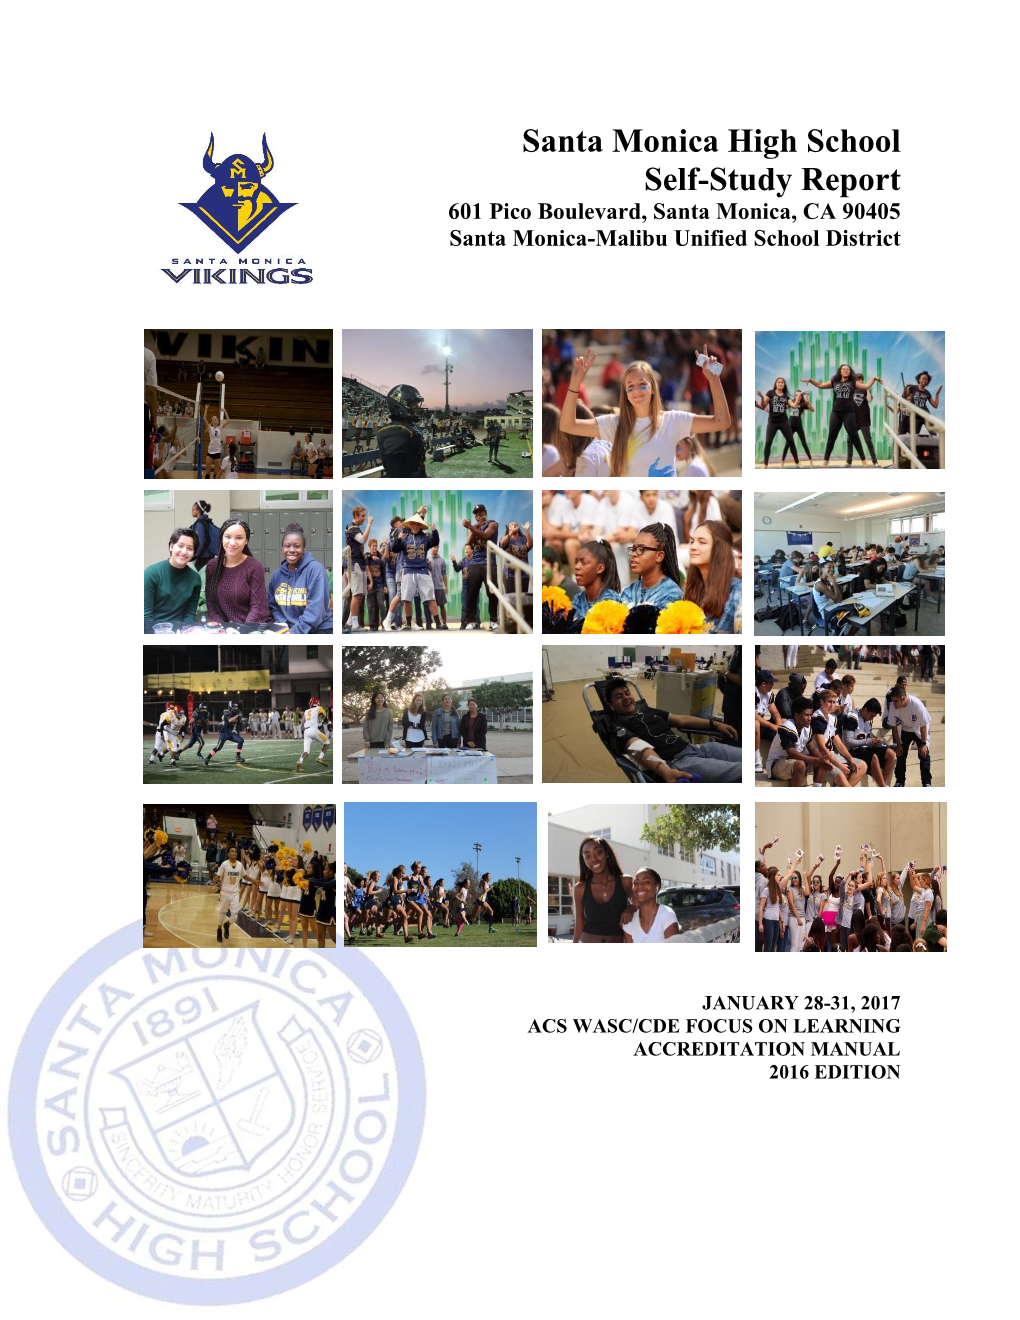 Santa Monica High School Self-Study Report 601 Pico Boulevard, Santa Monica, CA 90405 Santa Monica-Malibu Unified School District